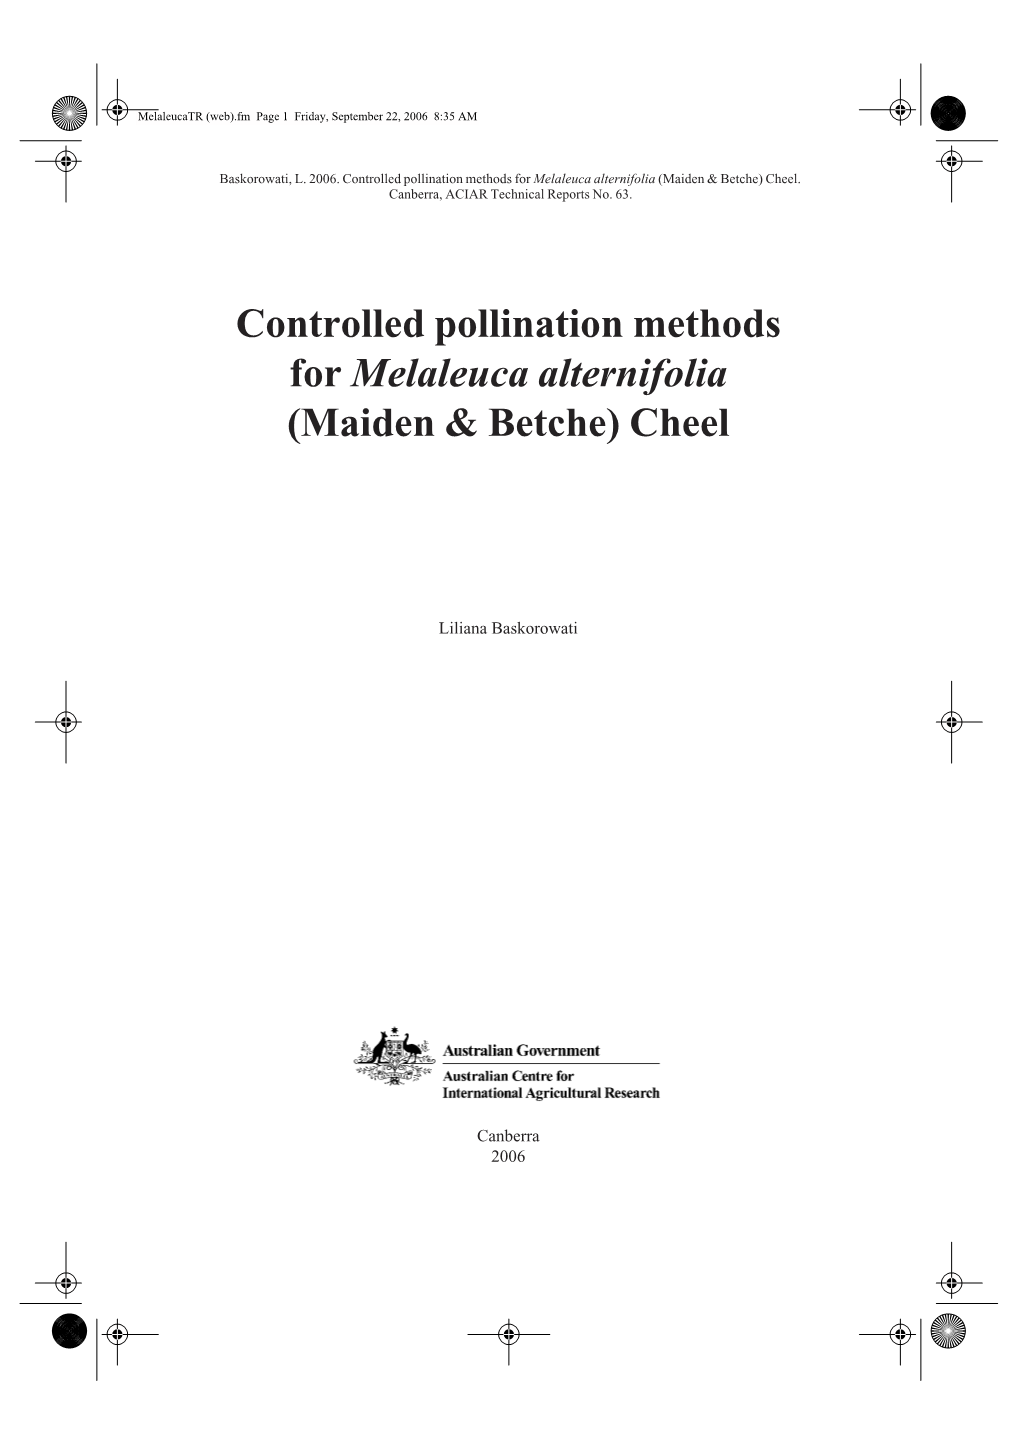 Controlled Pollination Methods for Melaleuca Alternifolia (Maiden & Betche) Cheel